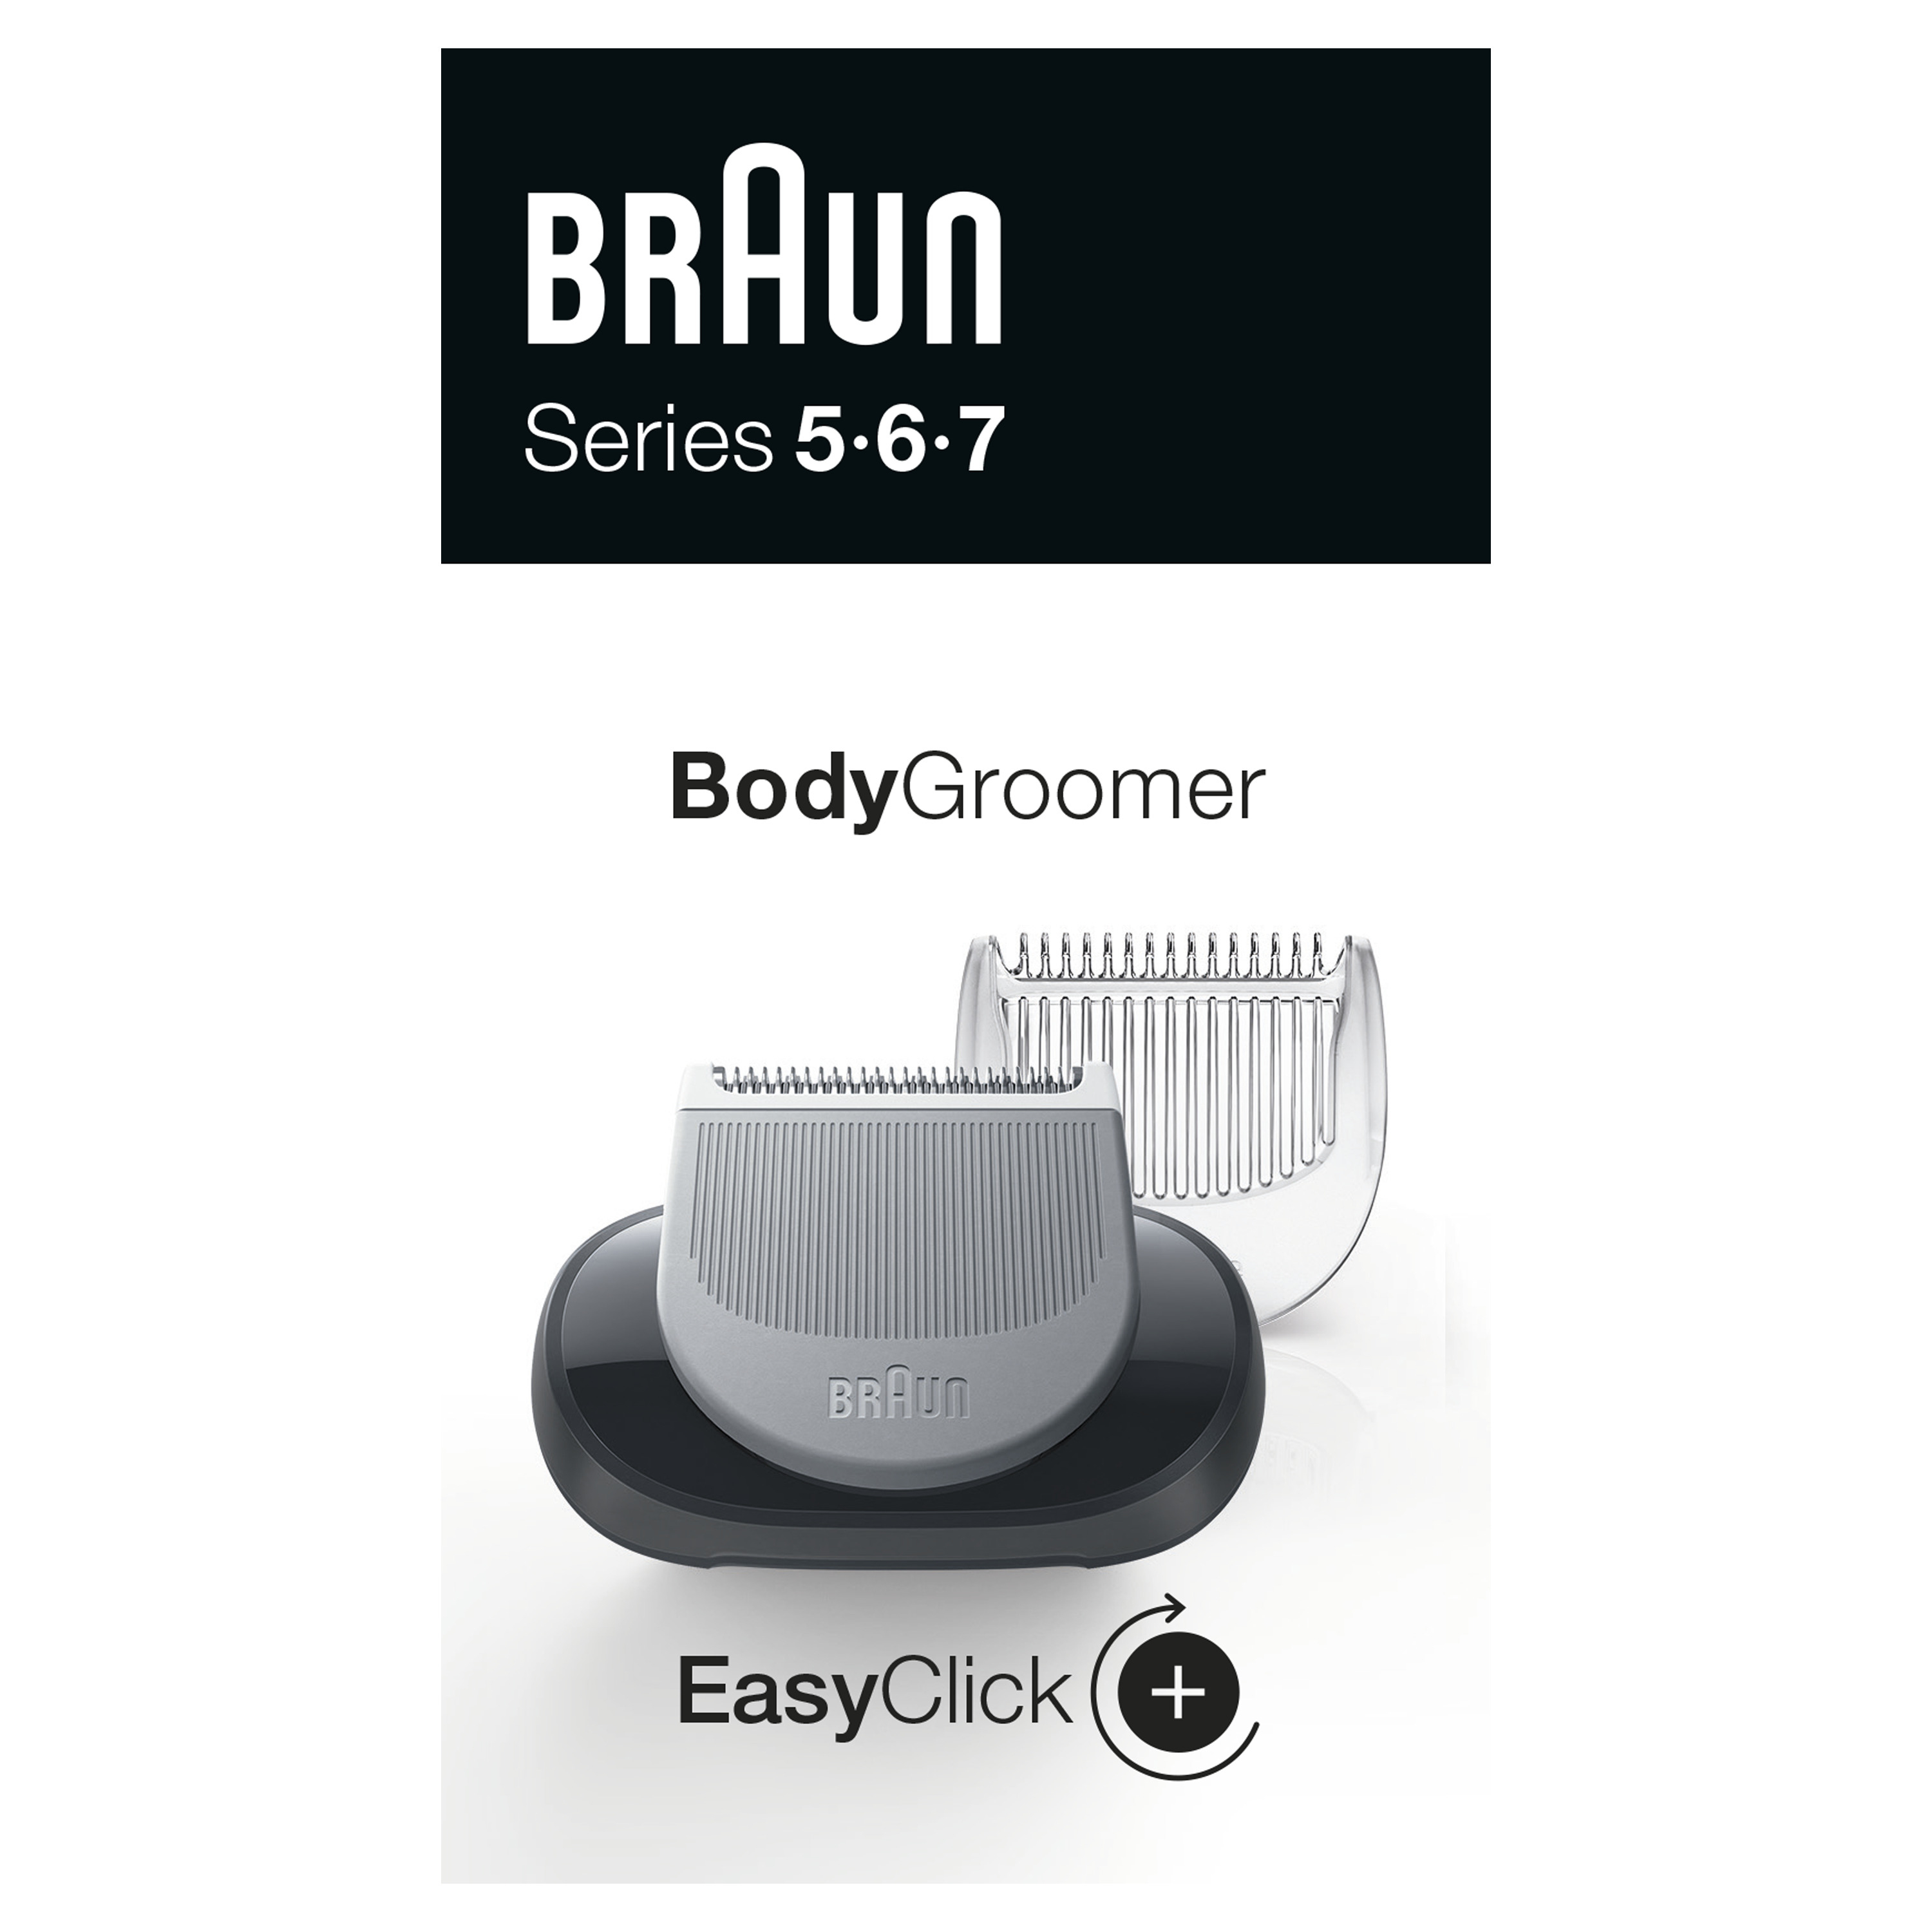 Braun Body Groomer